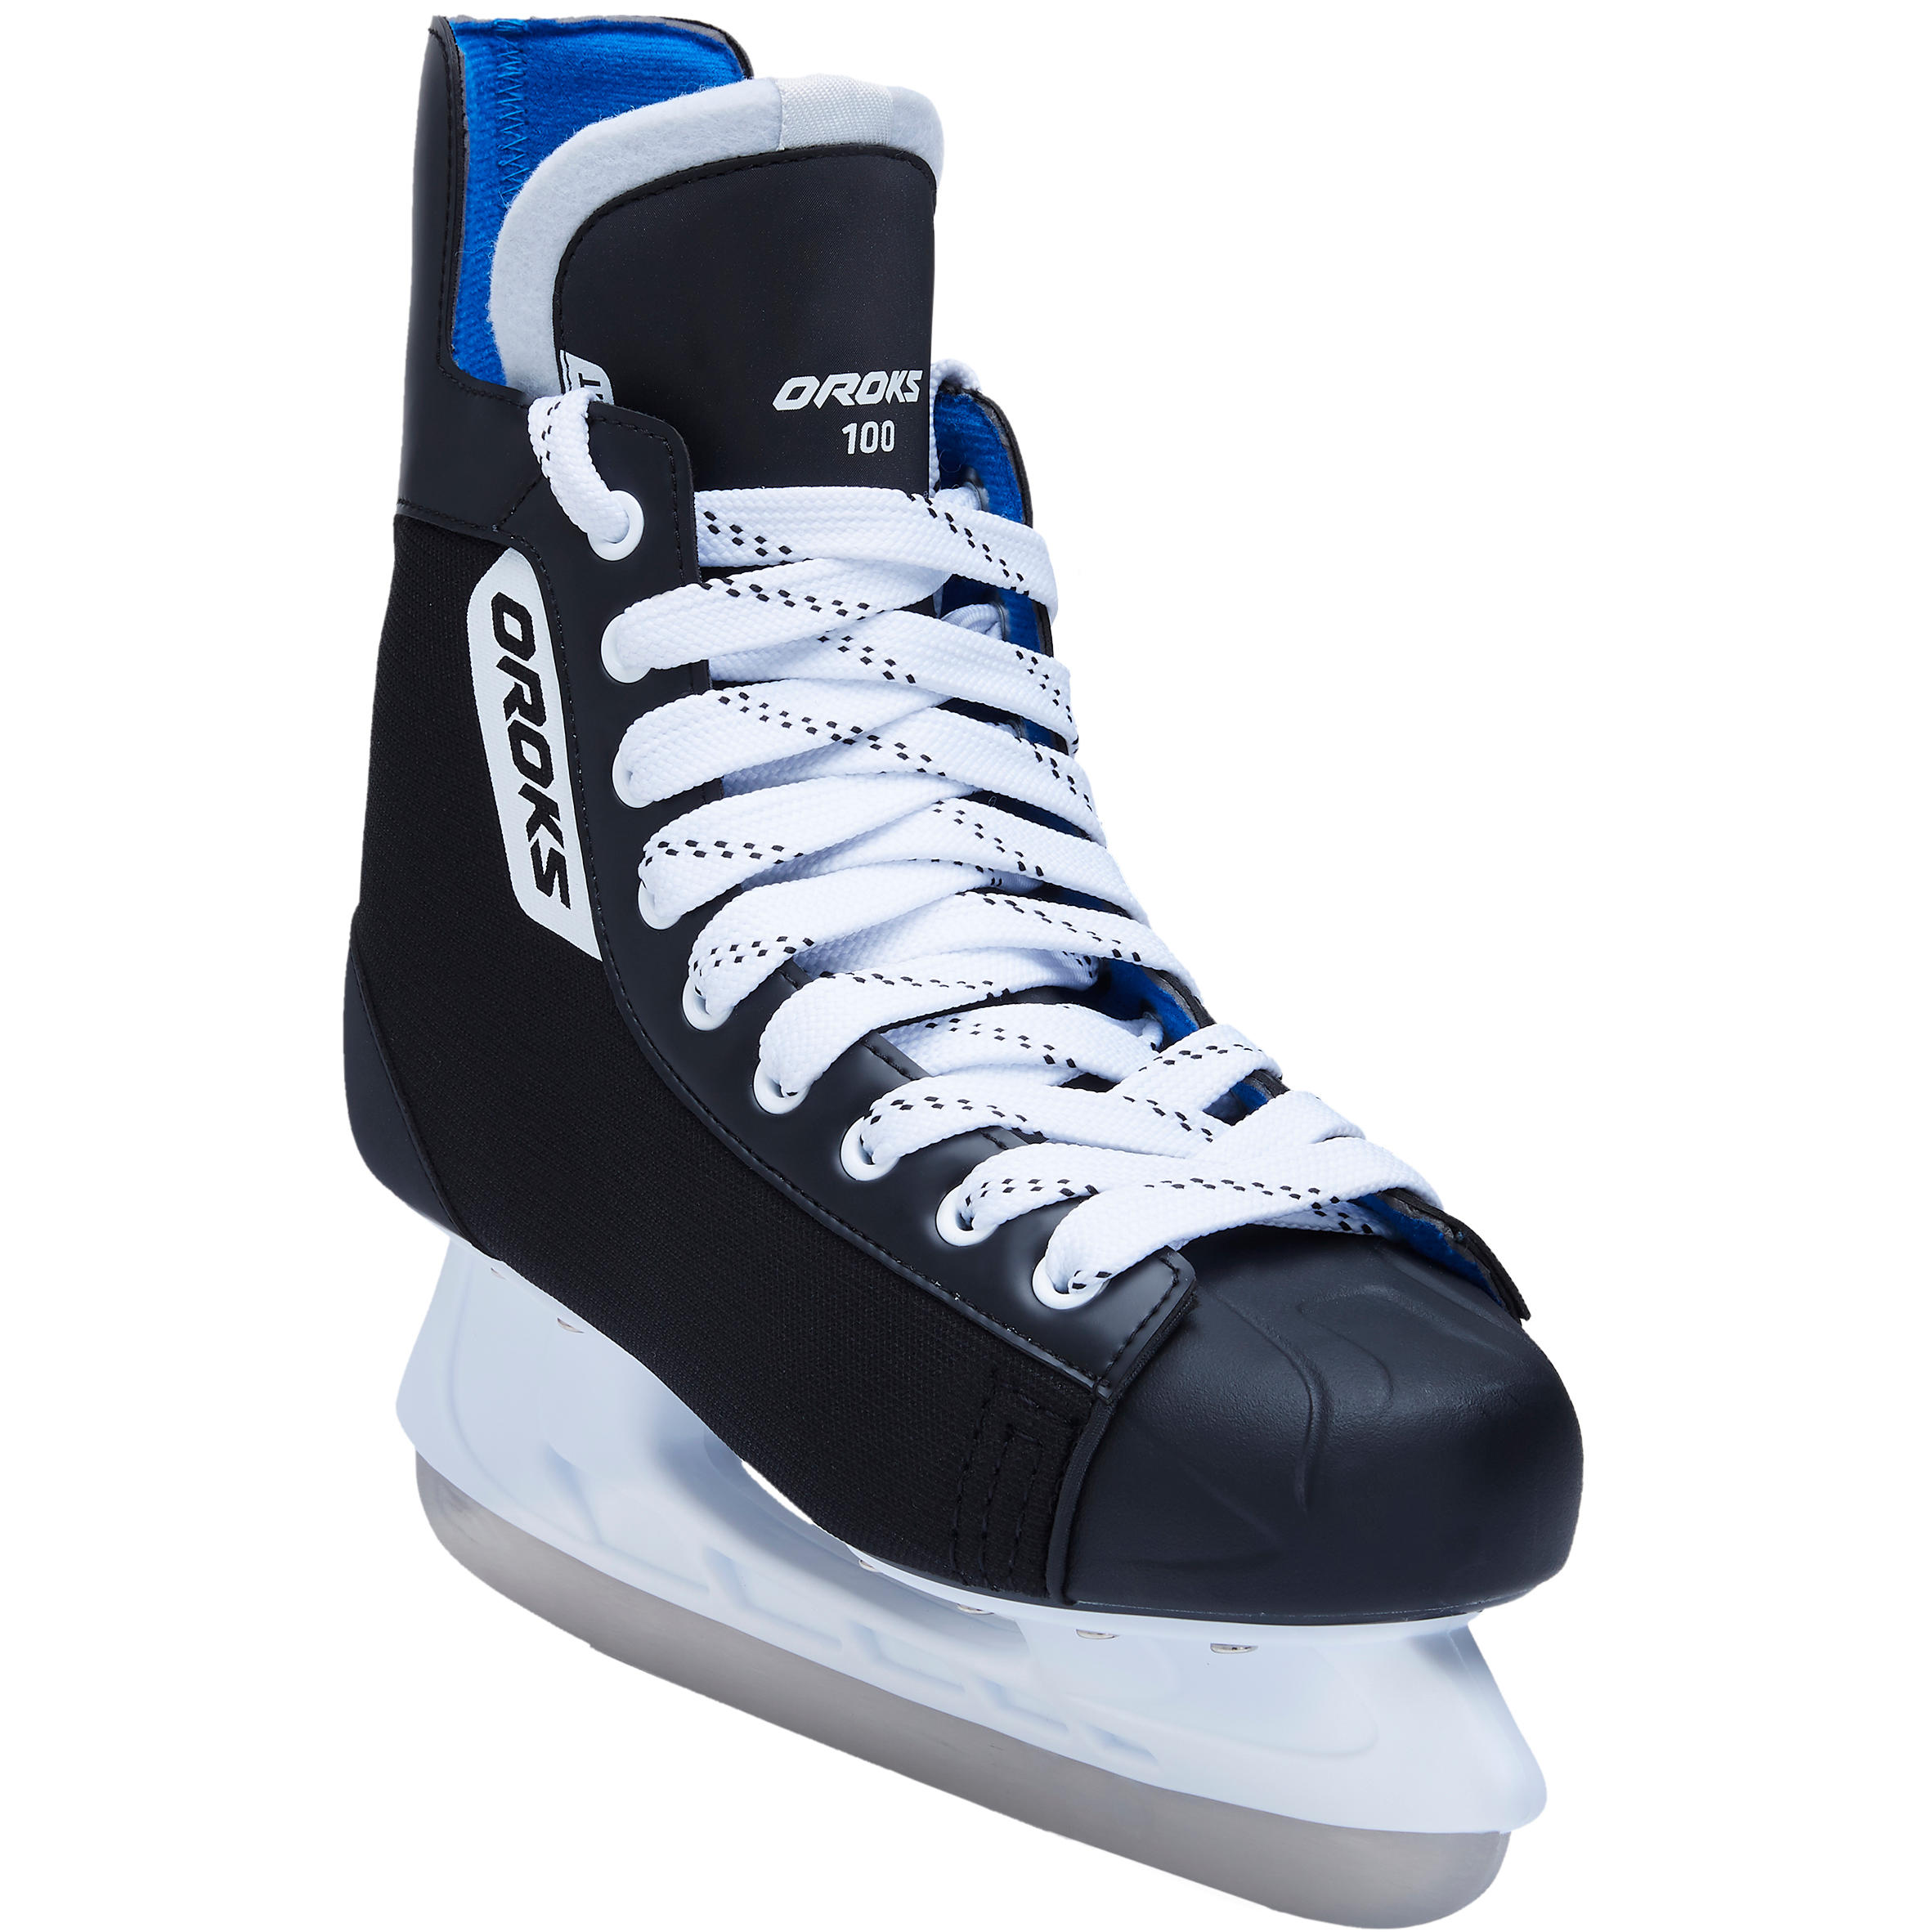 decathlon hockey shoes